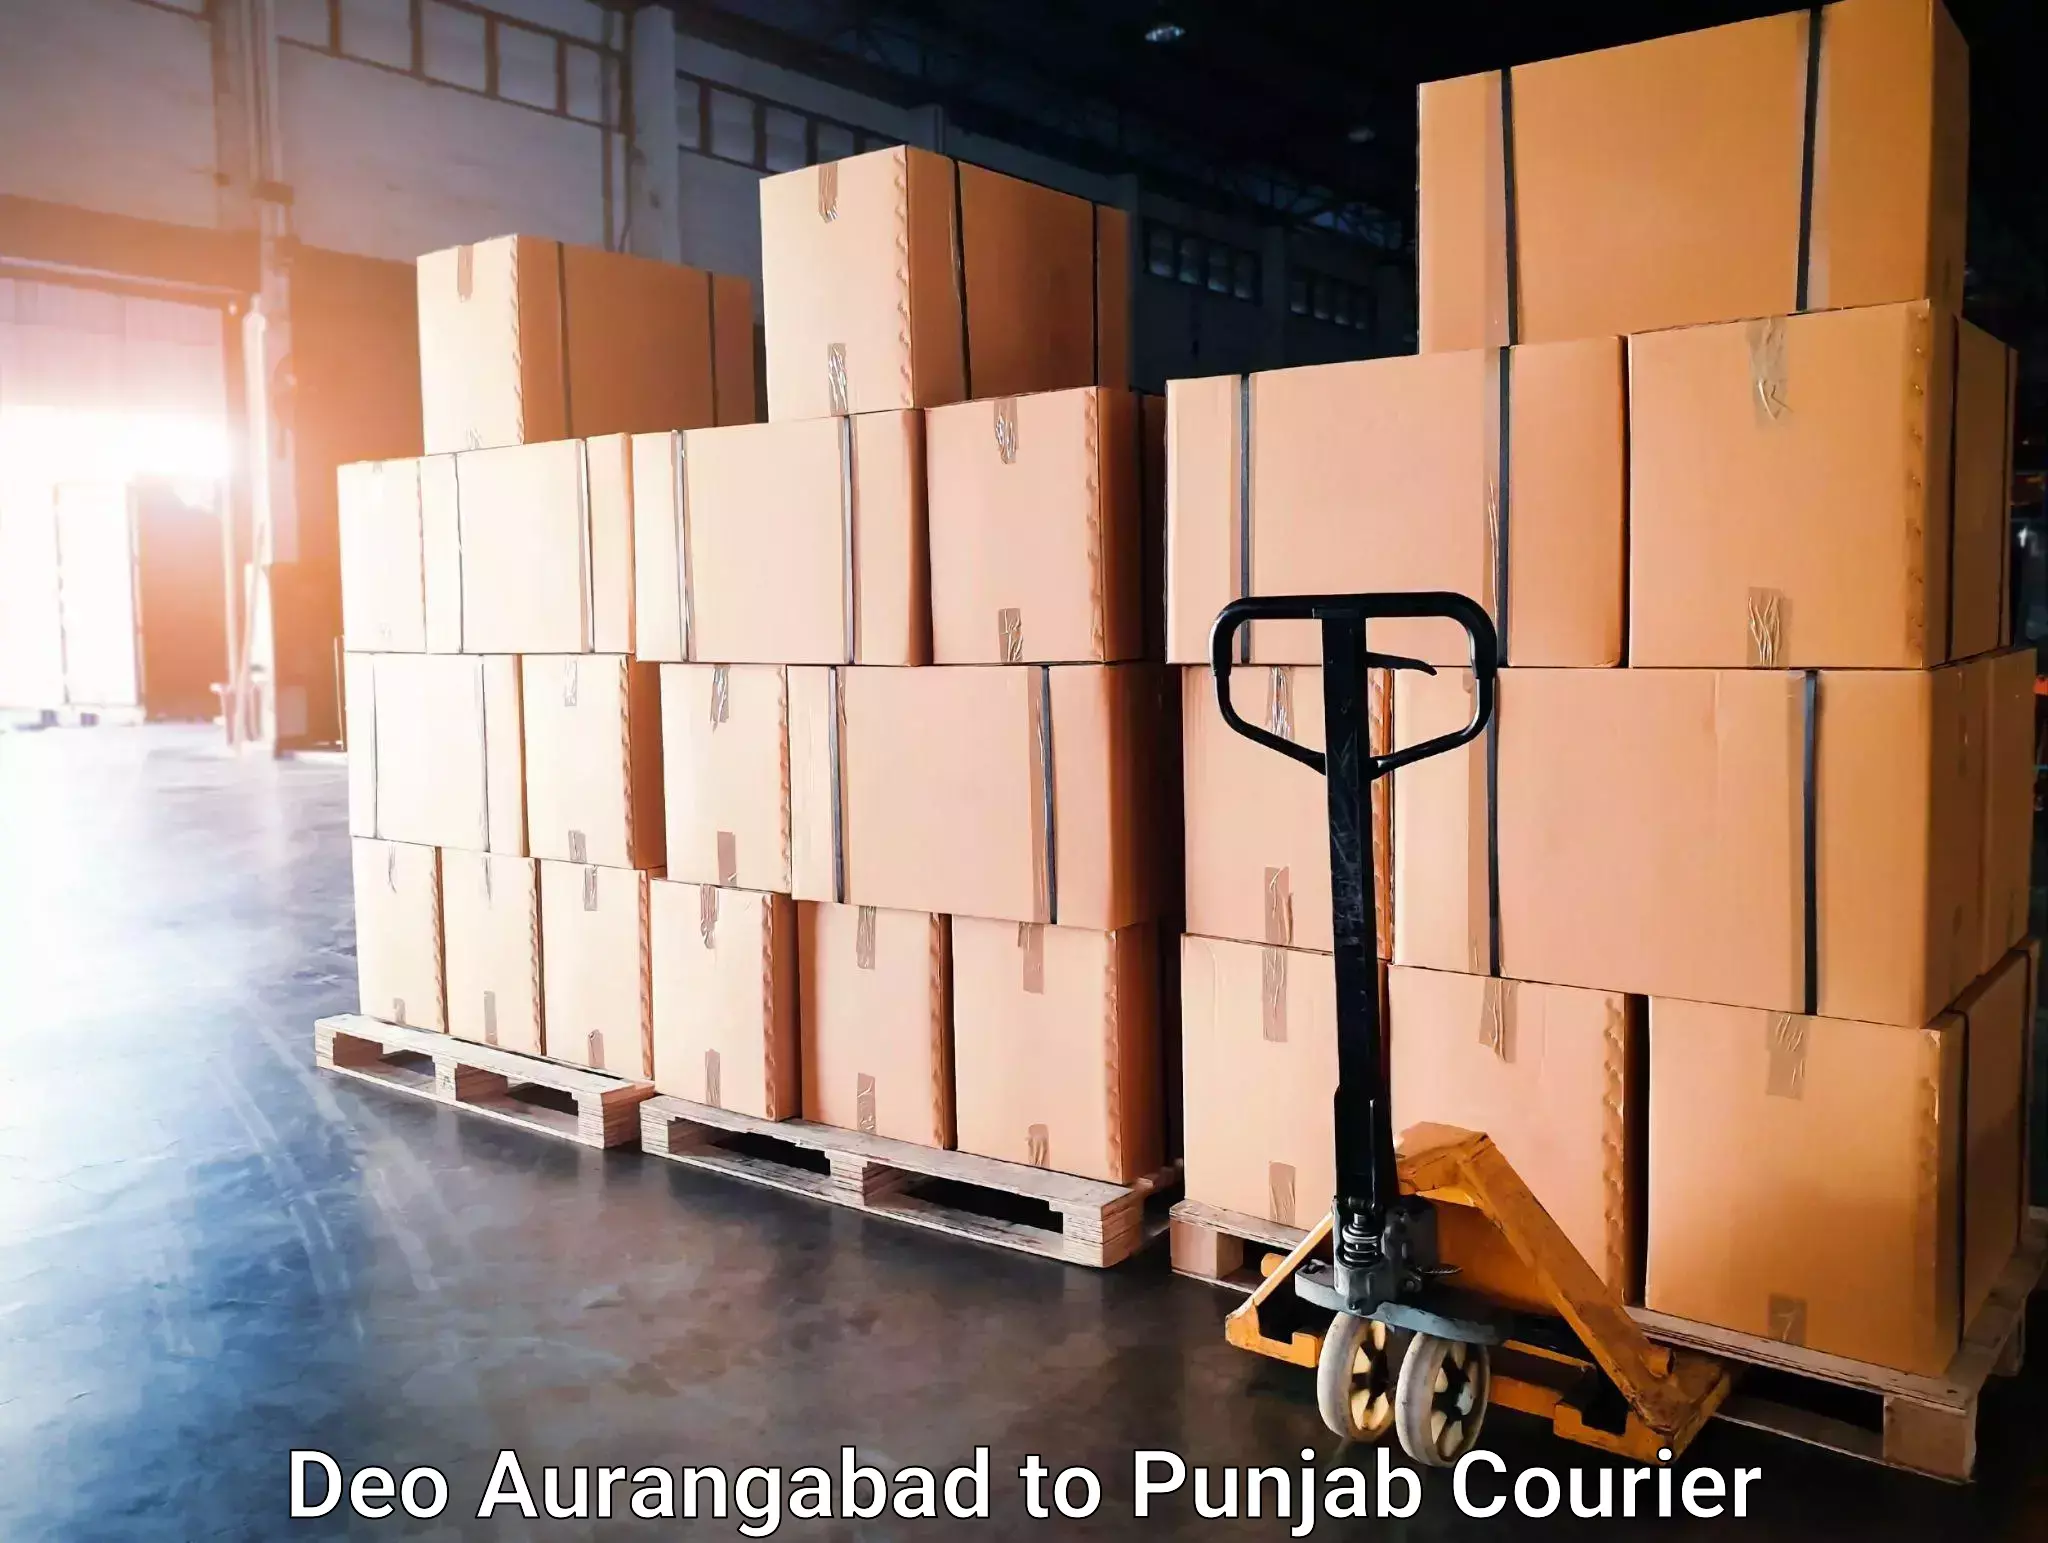 Furniture moving experts Deo Aurangabad to Punjab